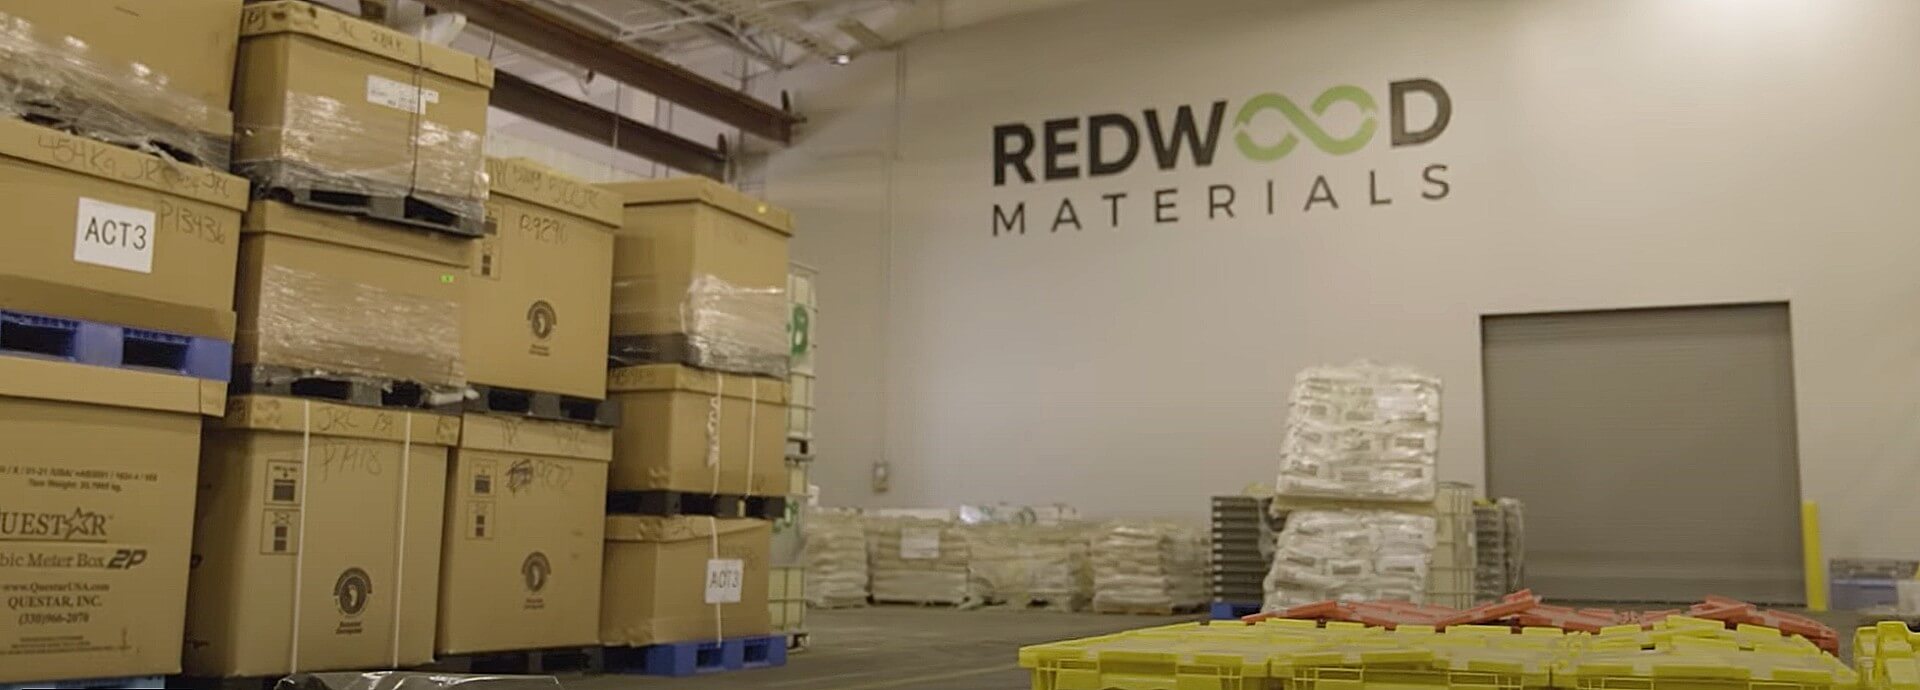 Redwood Materials 获批超过 1 亿美元的税收优惠